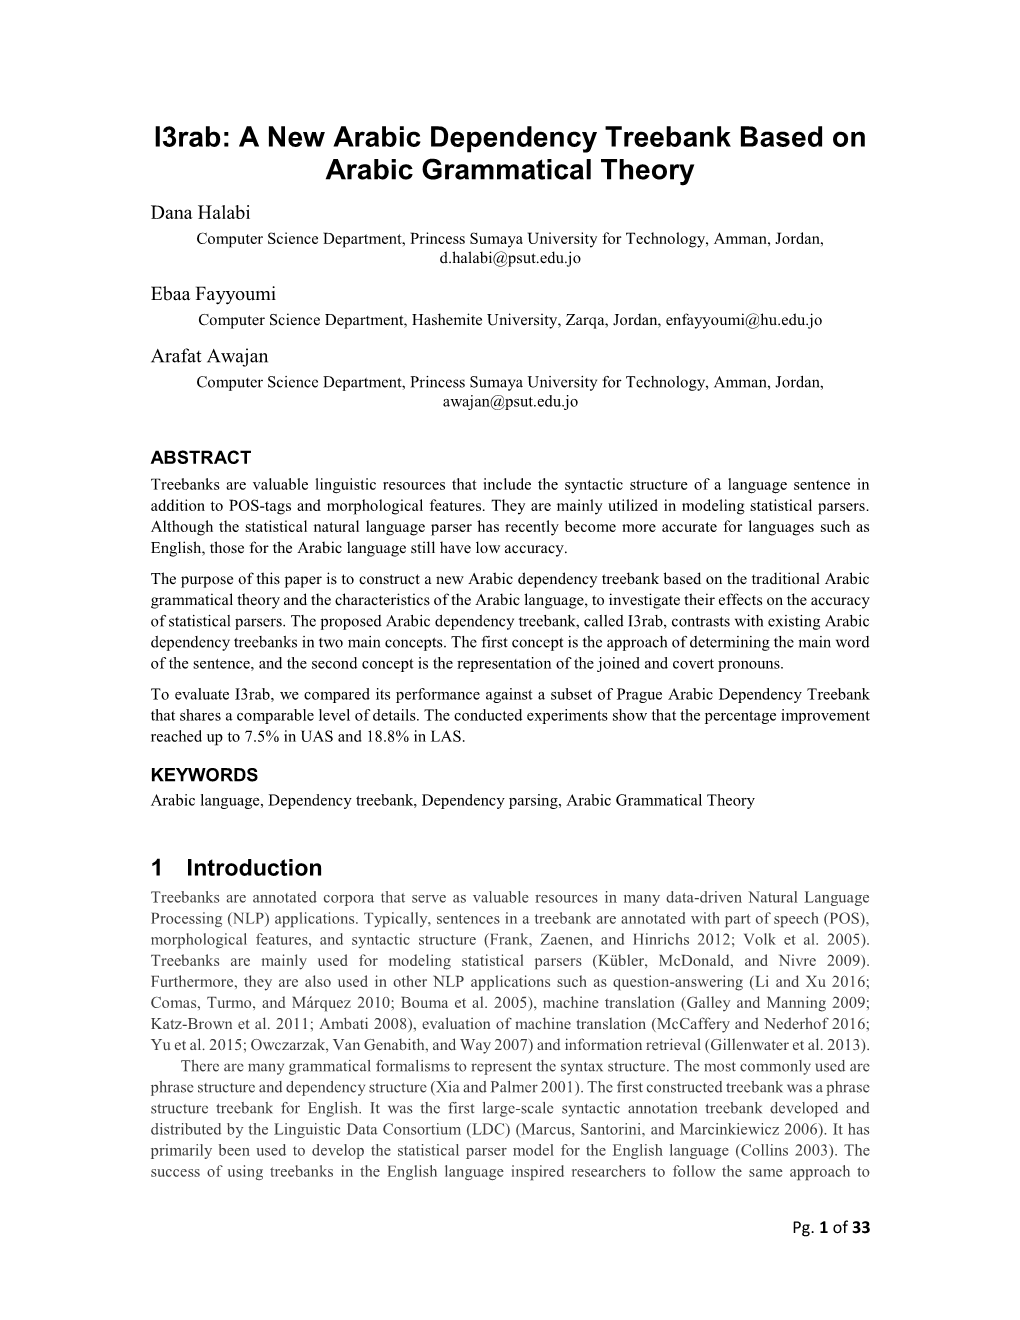 I3rab: a New Arabic Dependency Treebank Based on Arabic